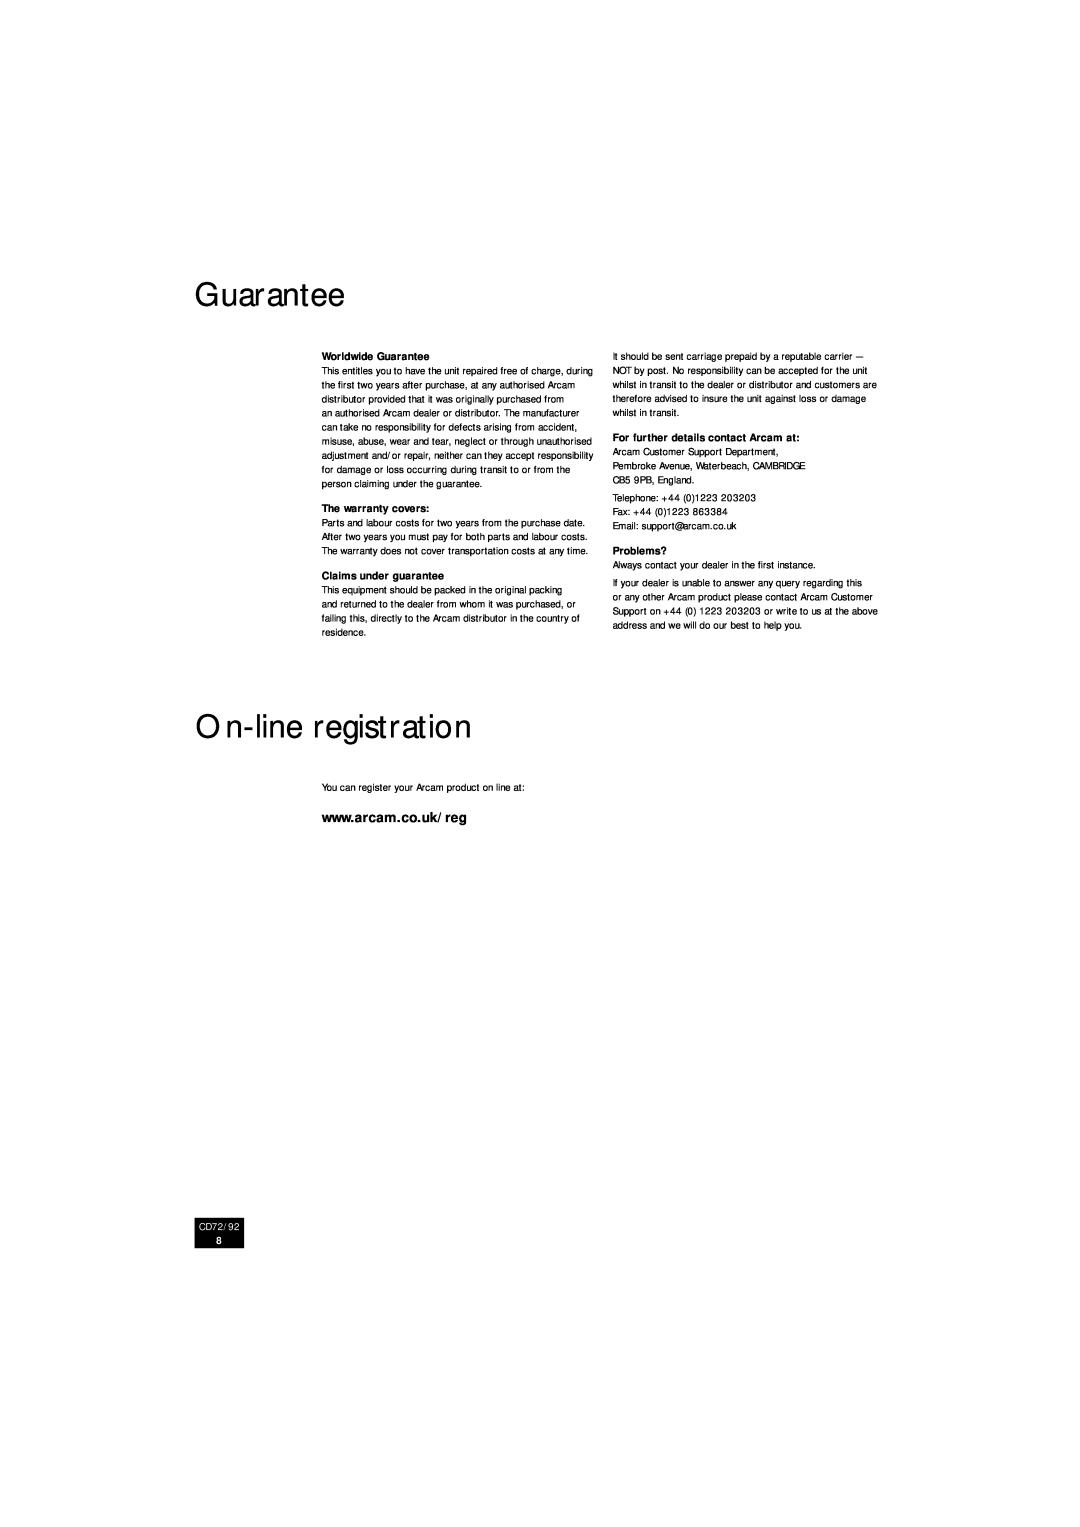 Arcam CD92 manual Guarantee, On-lineregistration, CD72/92 